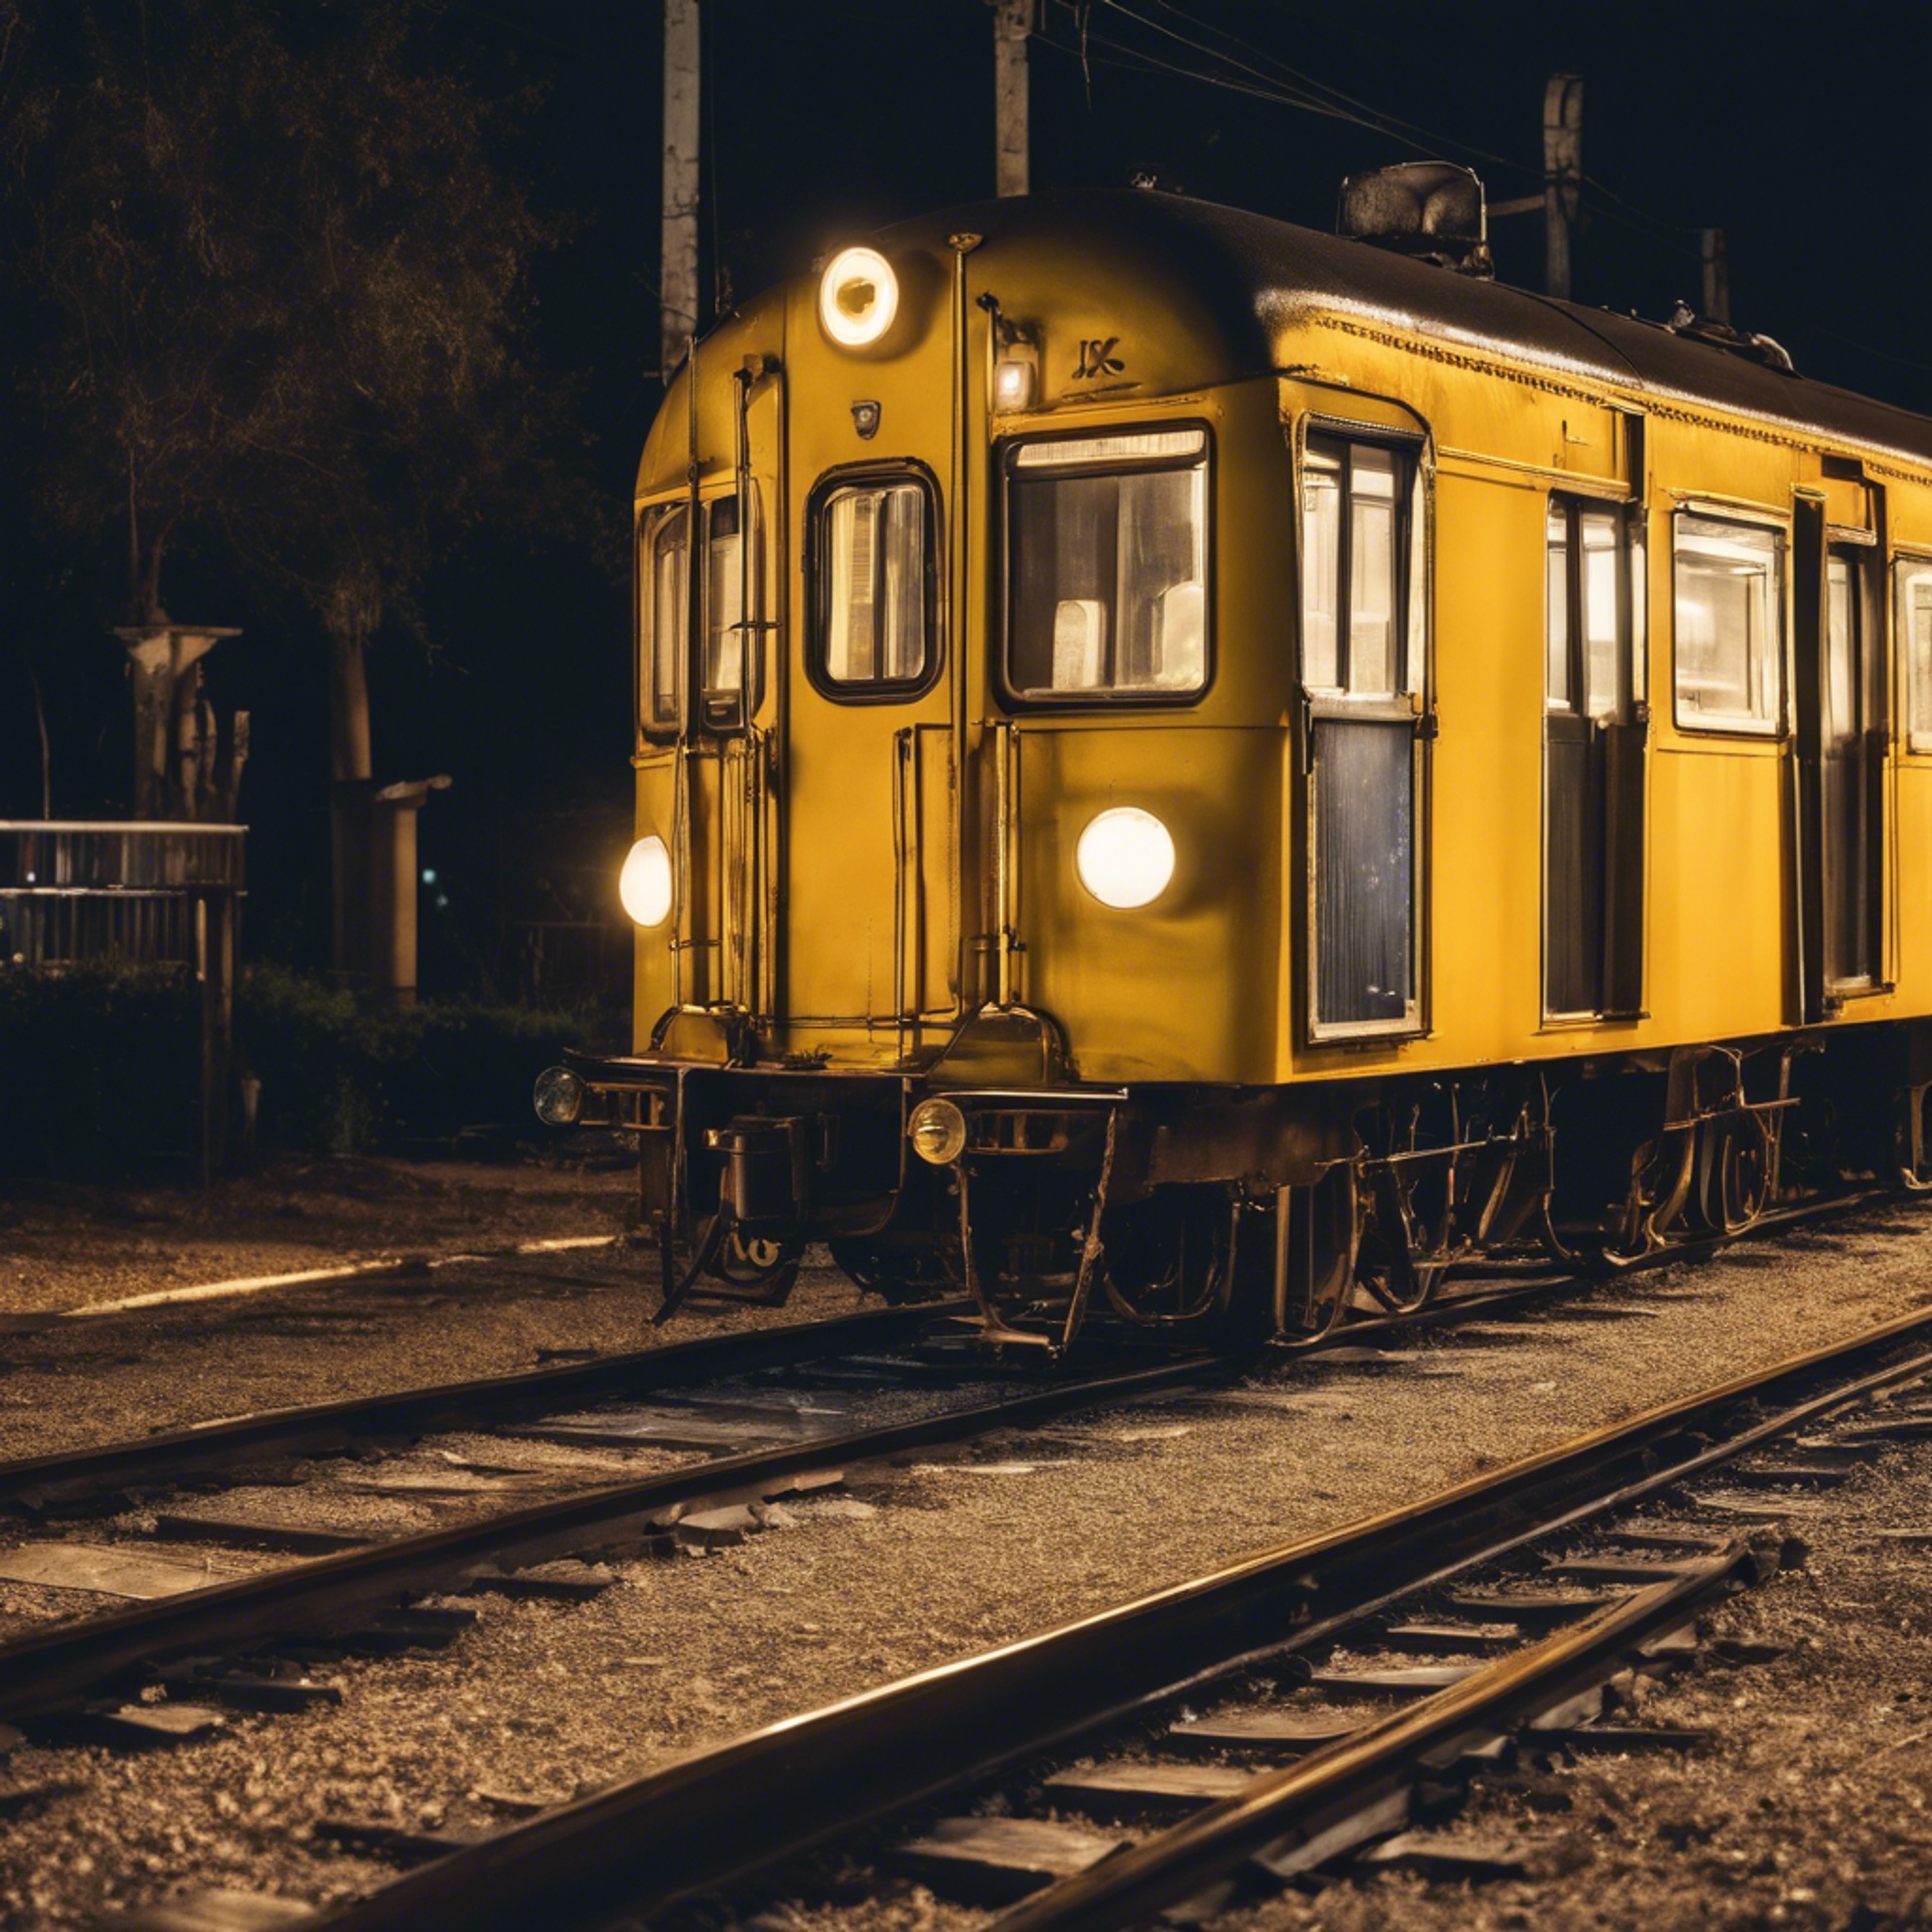 An old train with yellow windows brightly lit, barreling down black tracks at night.壁紙[0b0f949586204f2fa460]